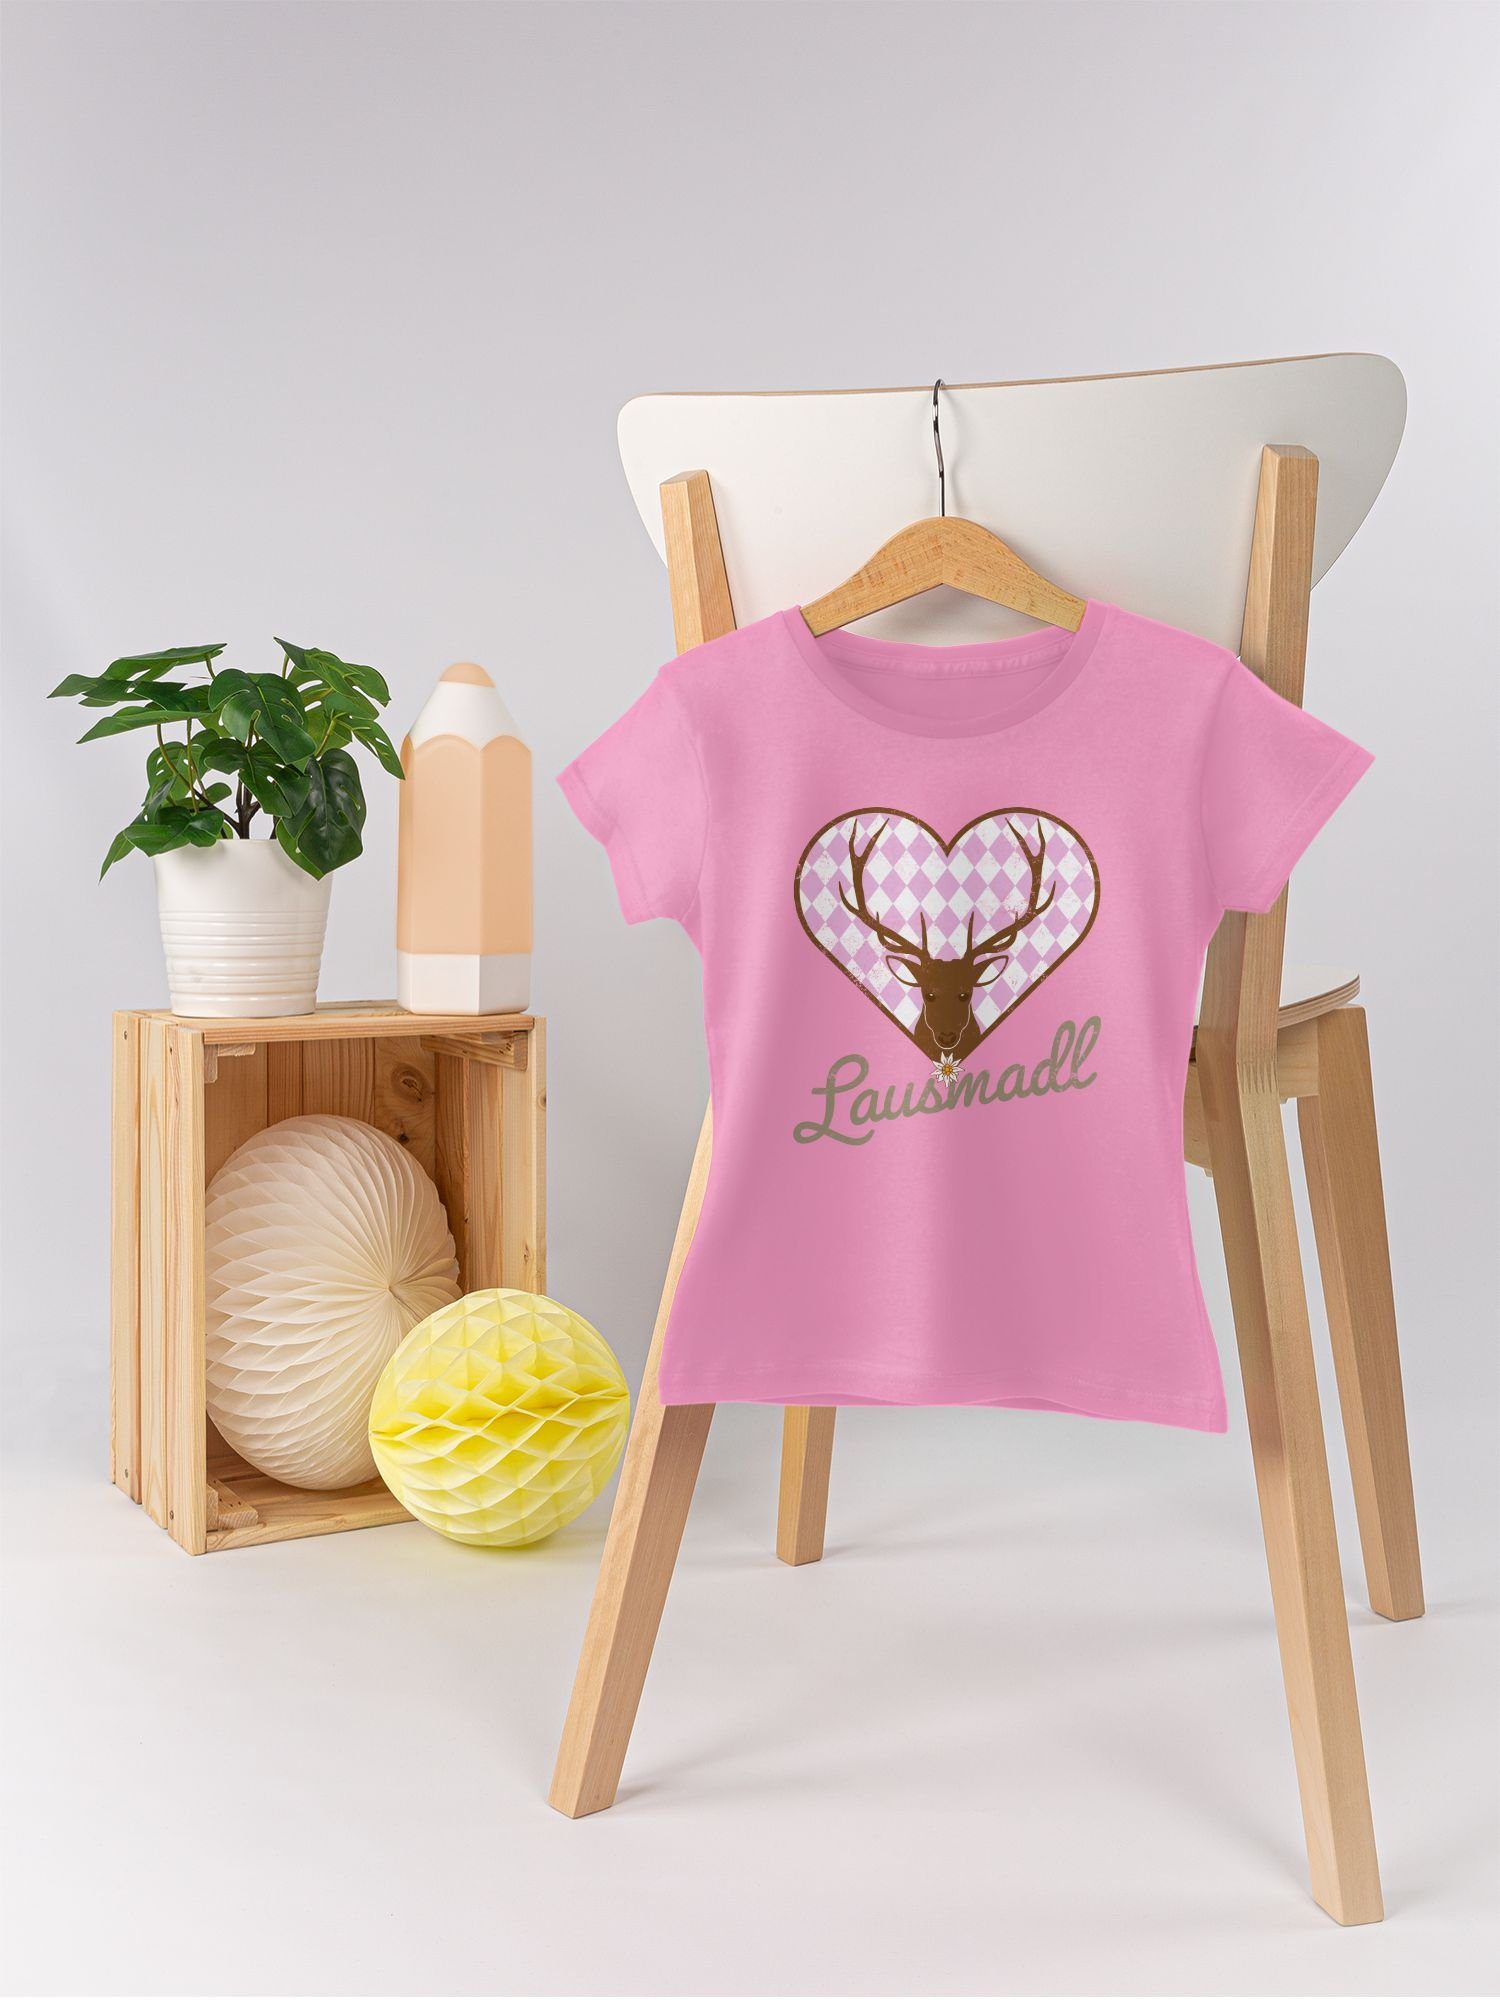 Lausmadl Outfit Rosa Mode T-Shirt für Kinder Oktoberfest Shirtracer Hirsch 2